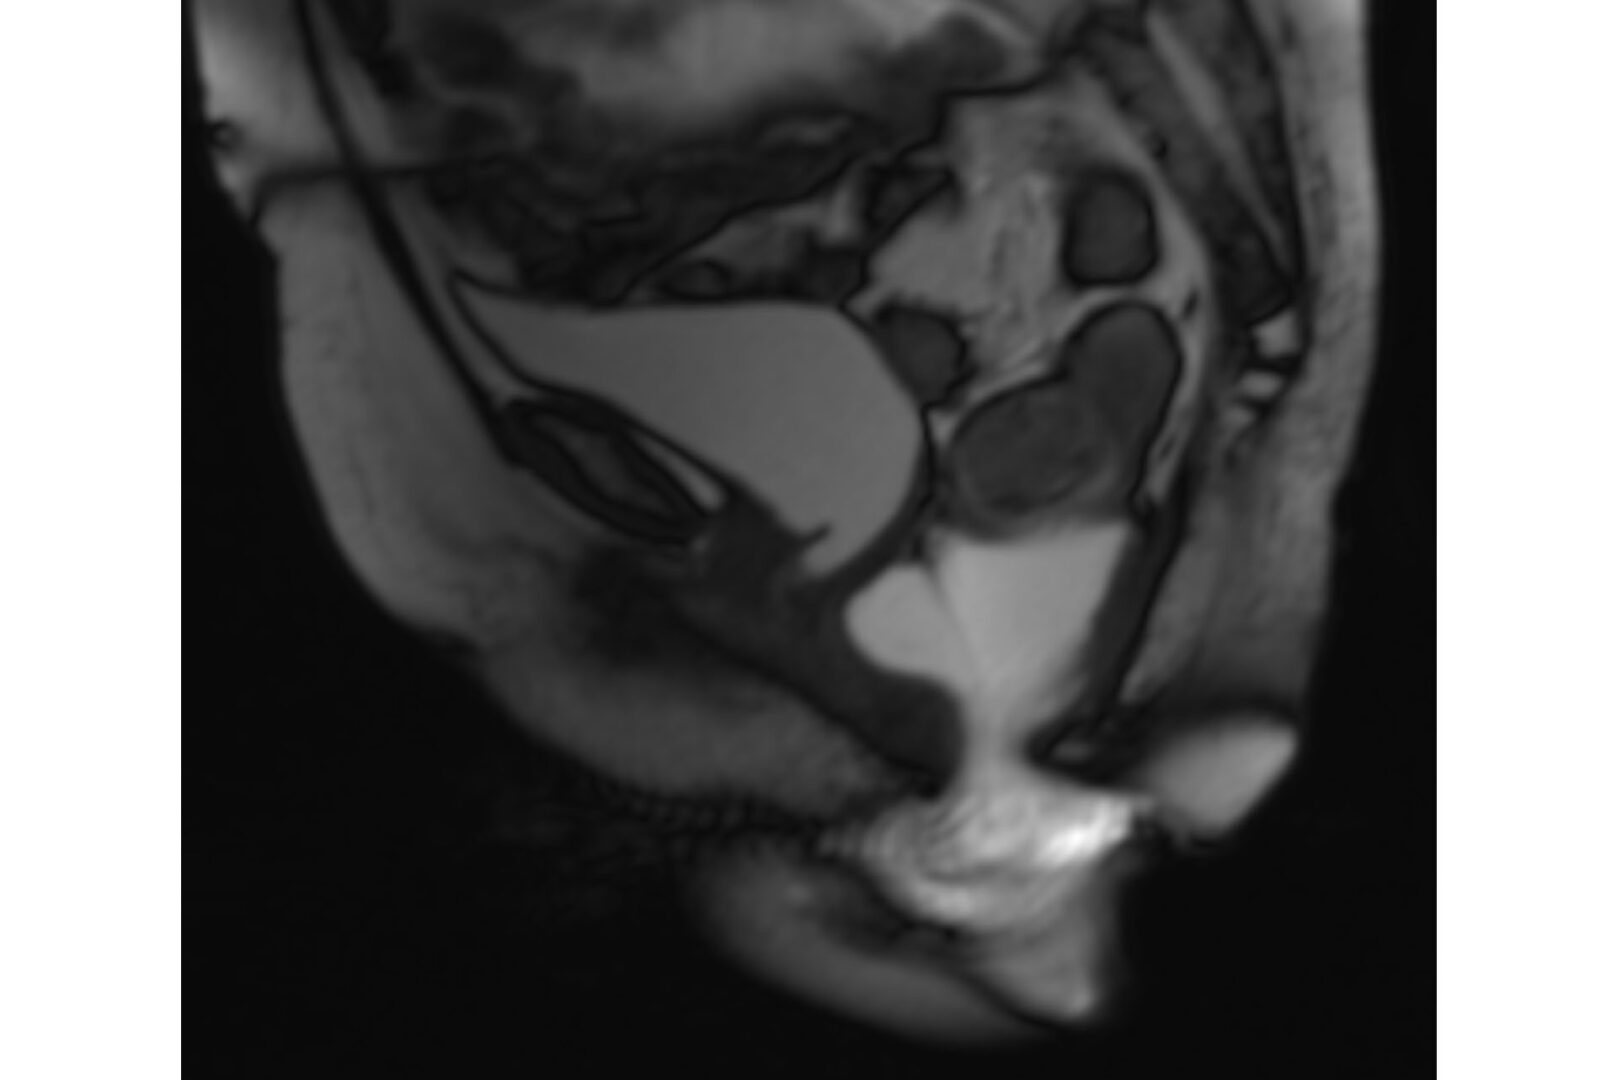 MRI defecography